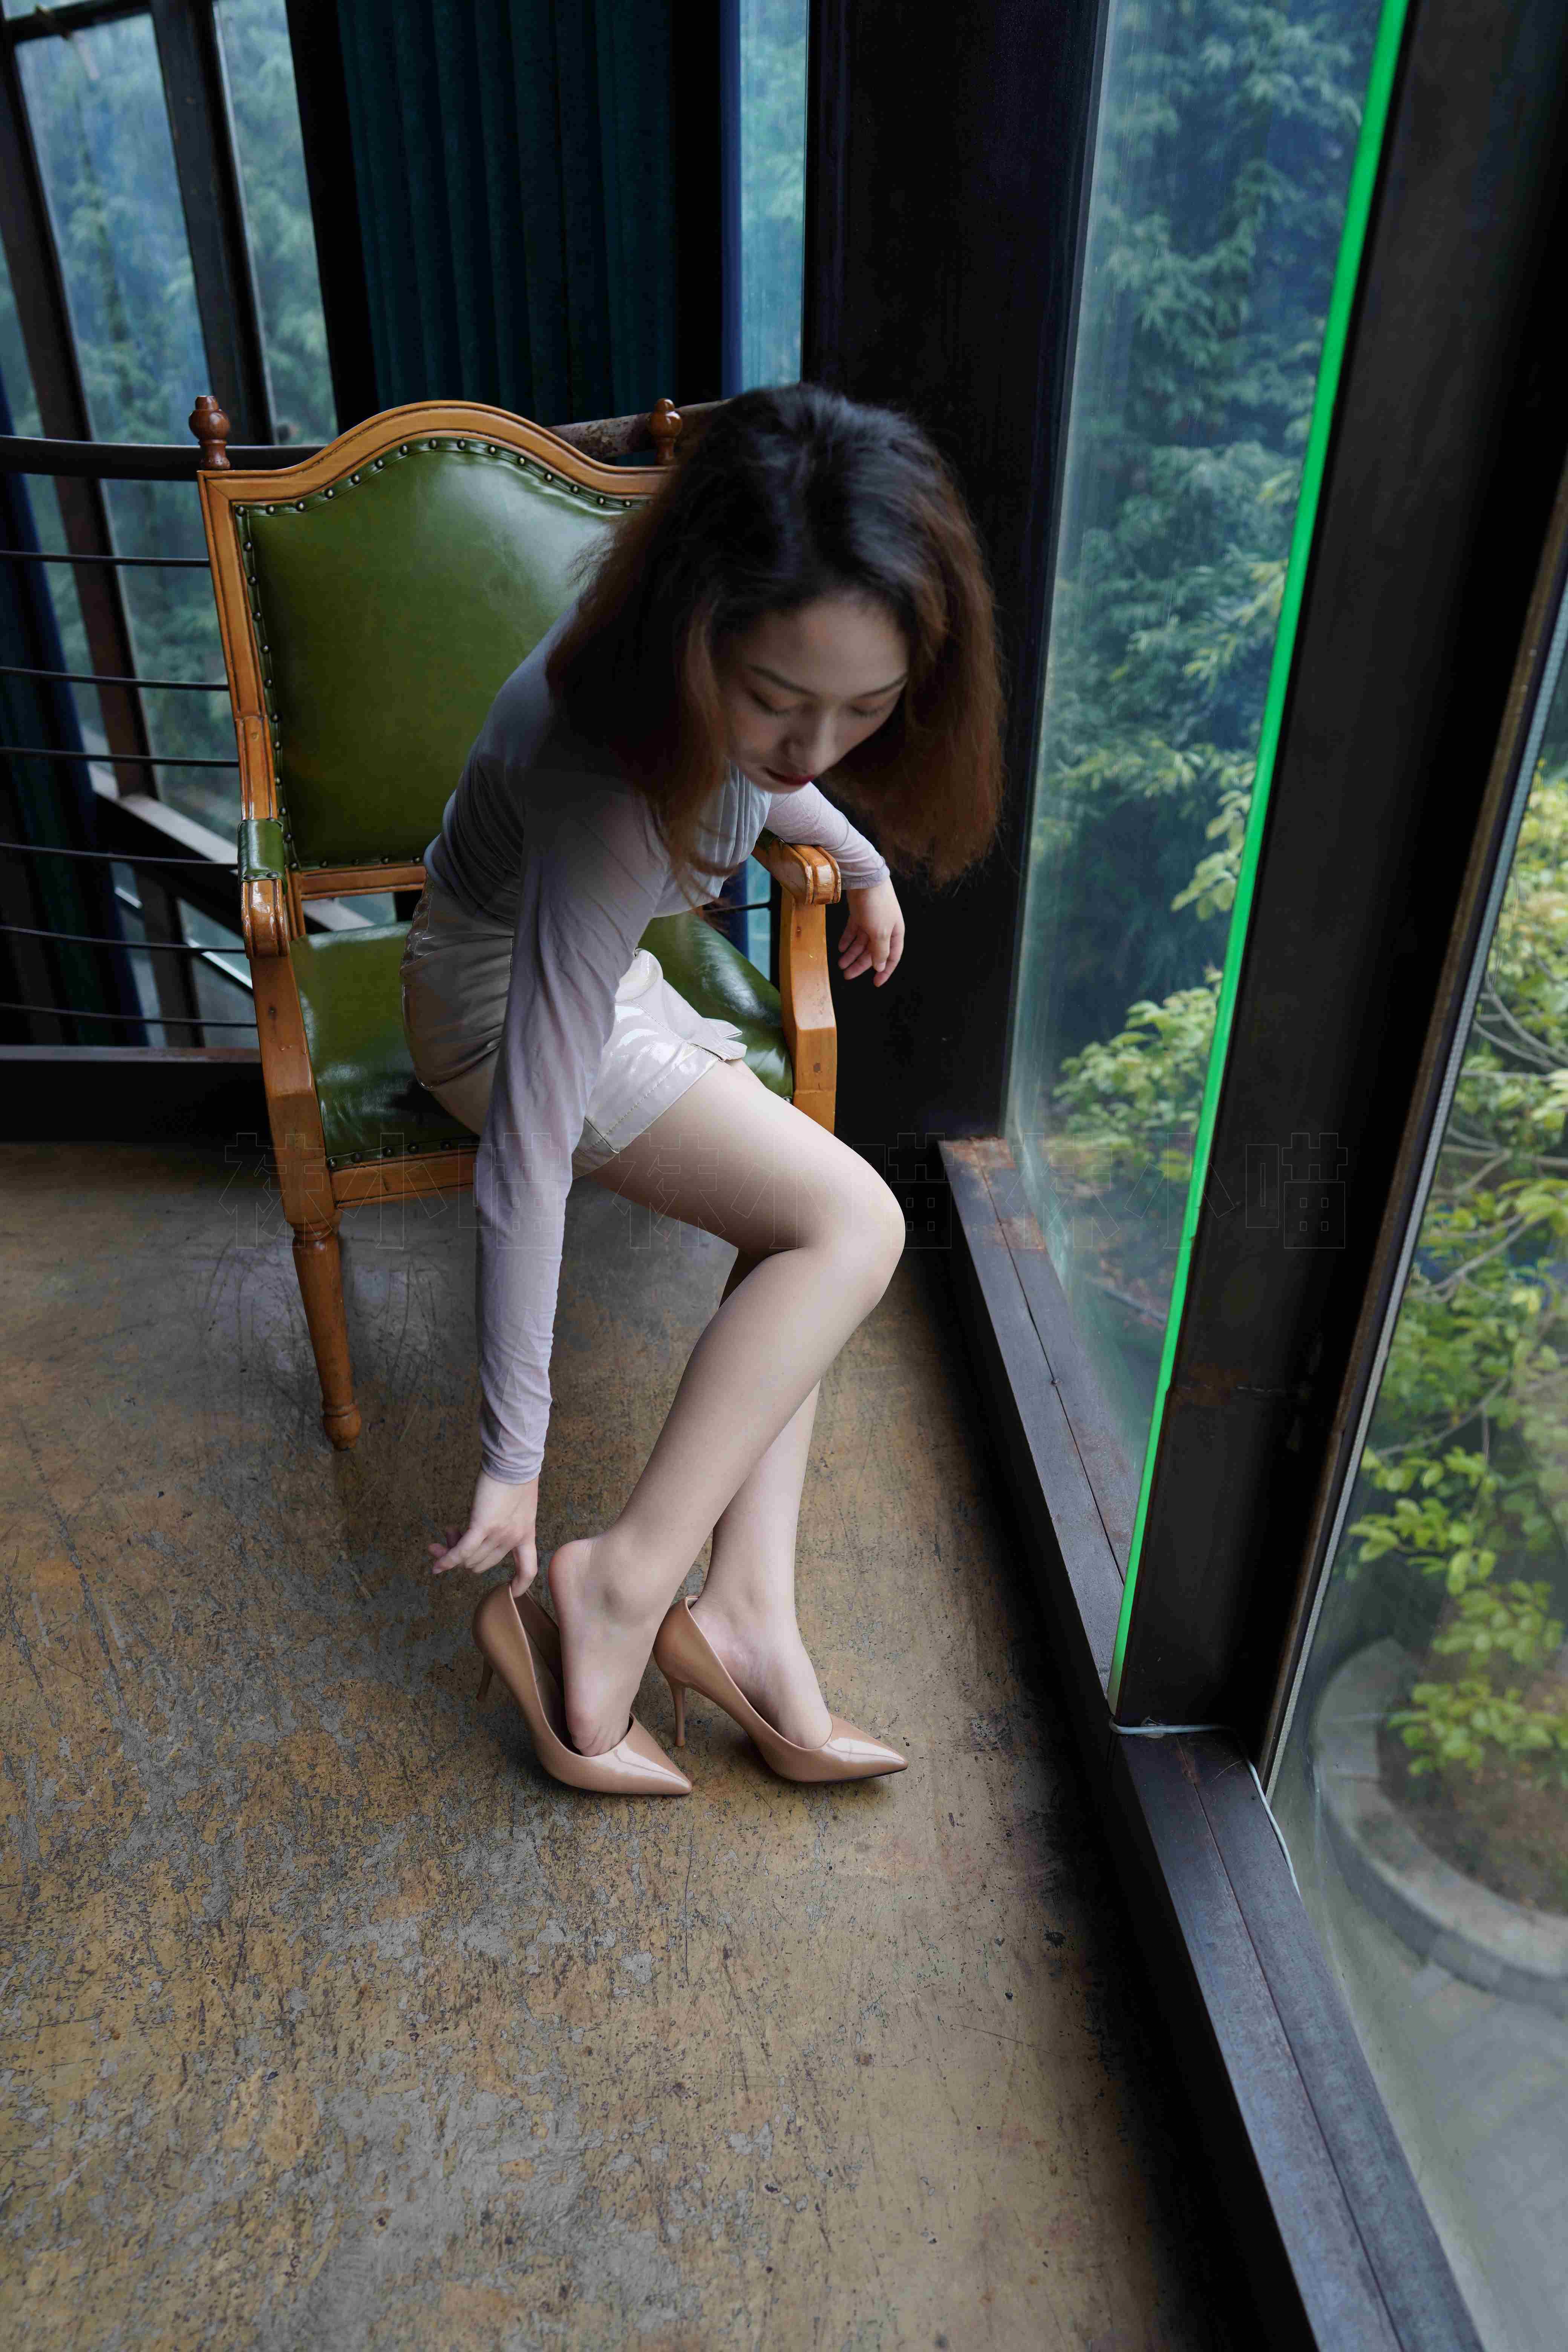 China Beauty Legs and feet 86